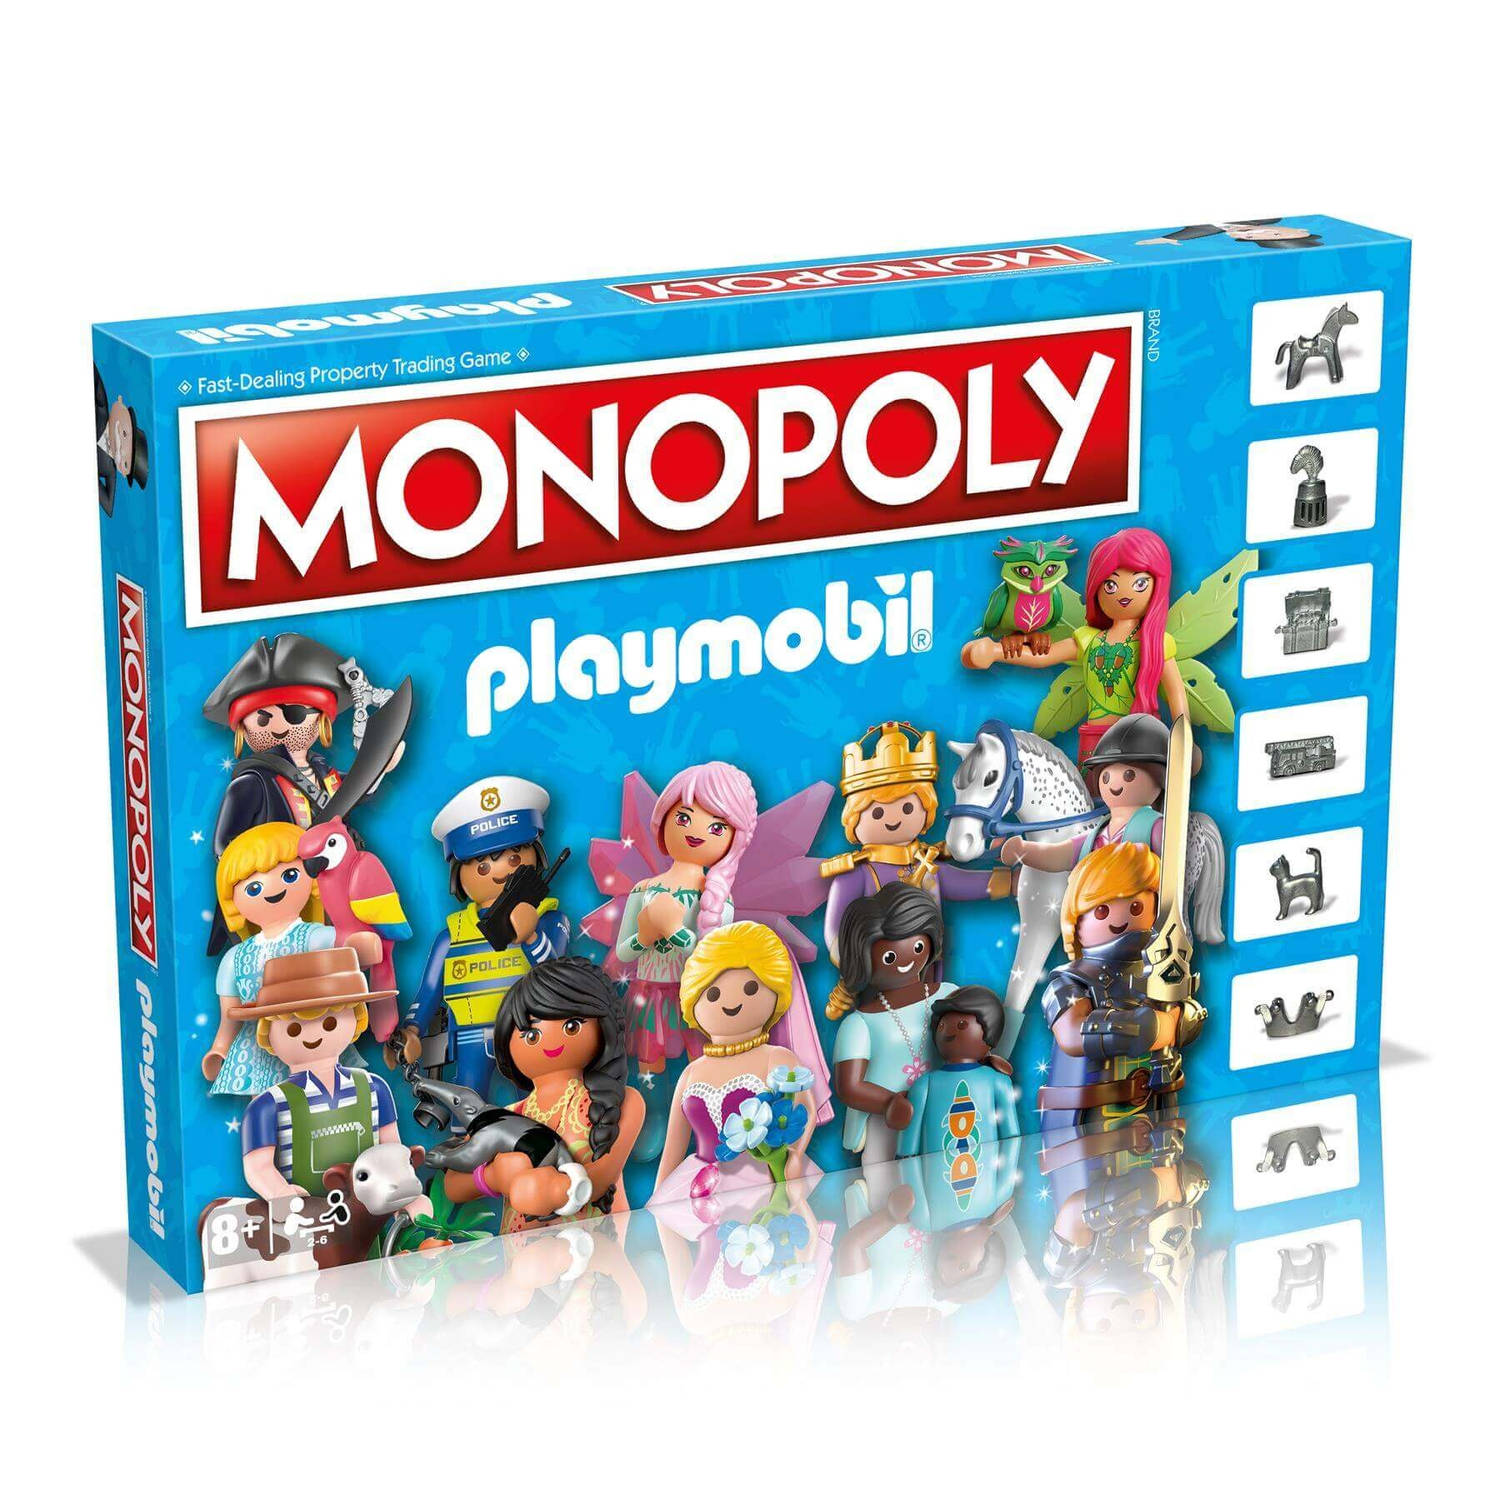 Monopoly Playmobil Edition (Engelstalig)